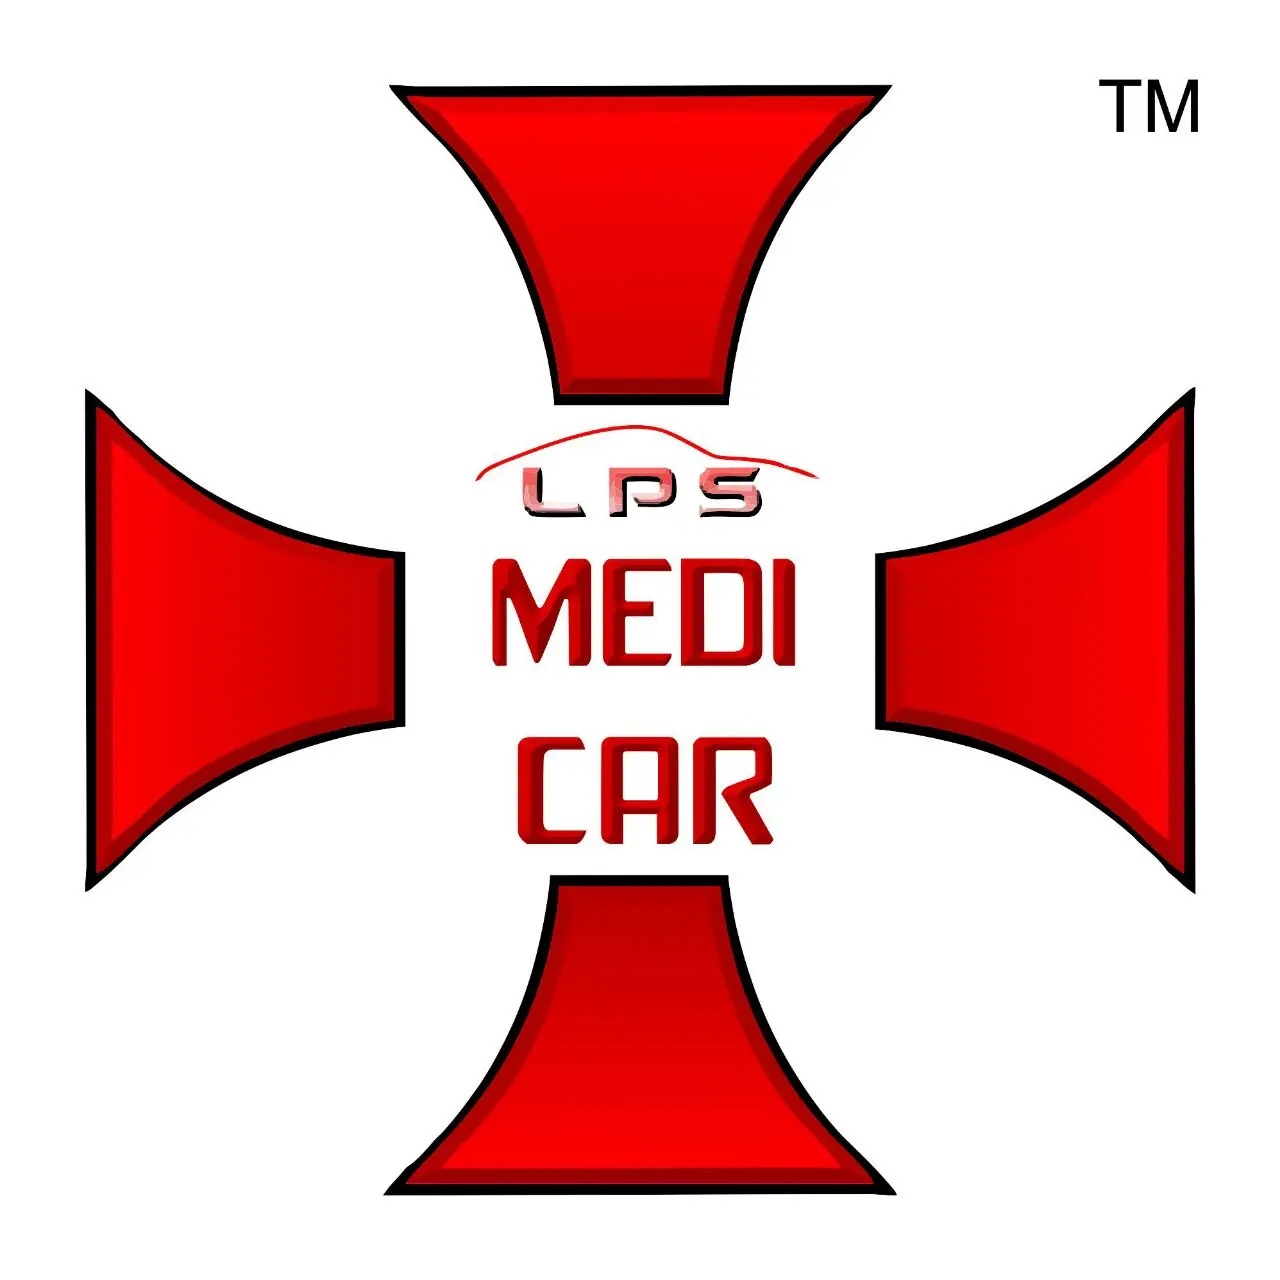 LPS Medi Car Investments (Pty) Ltd